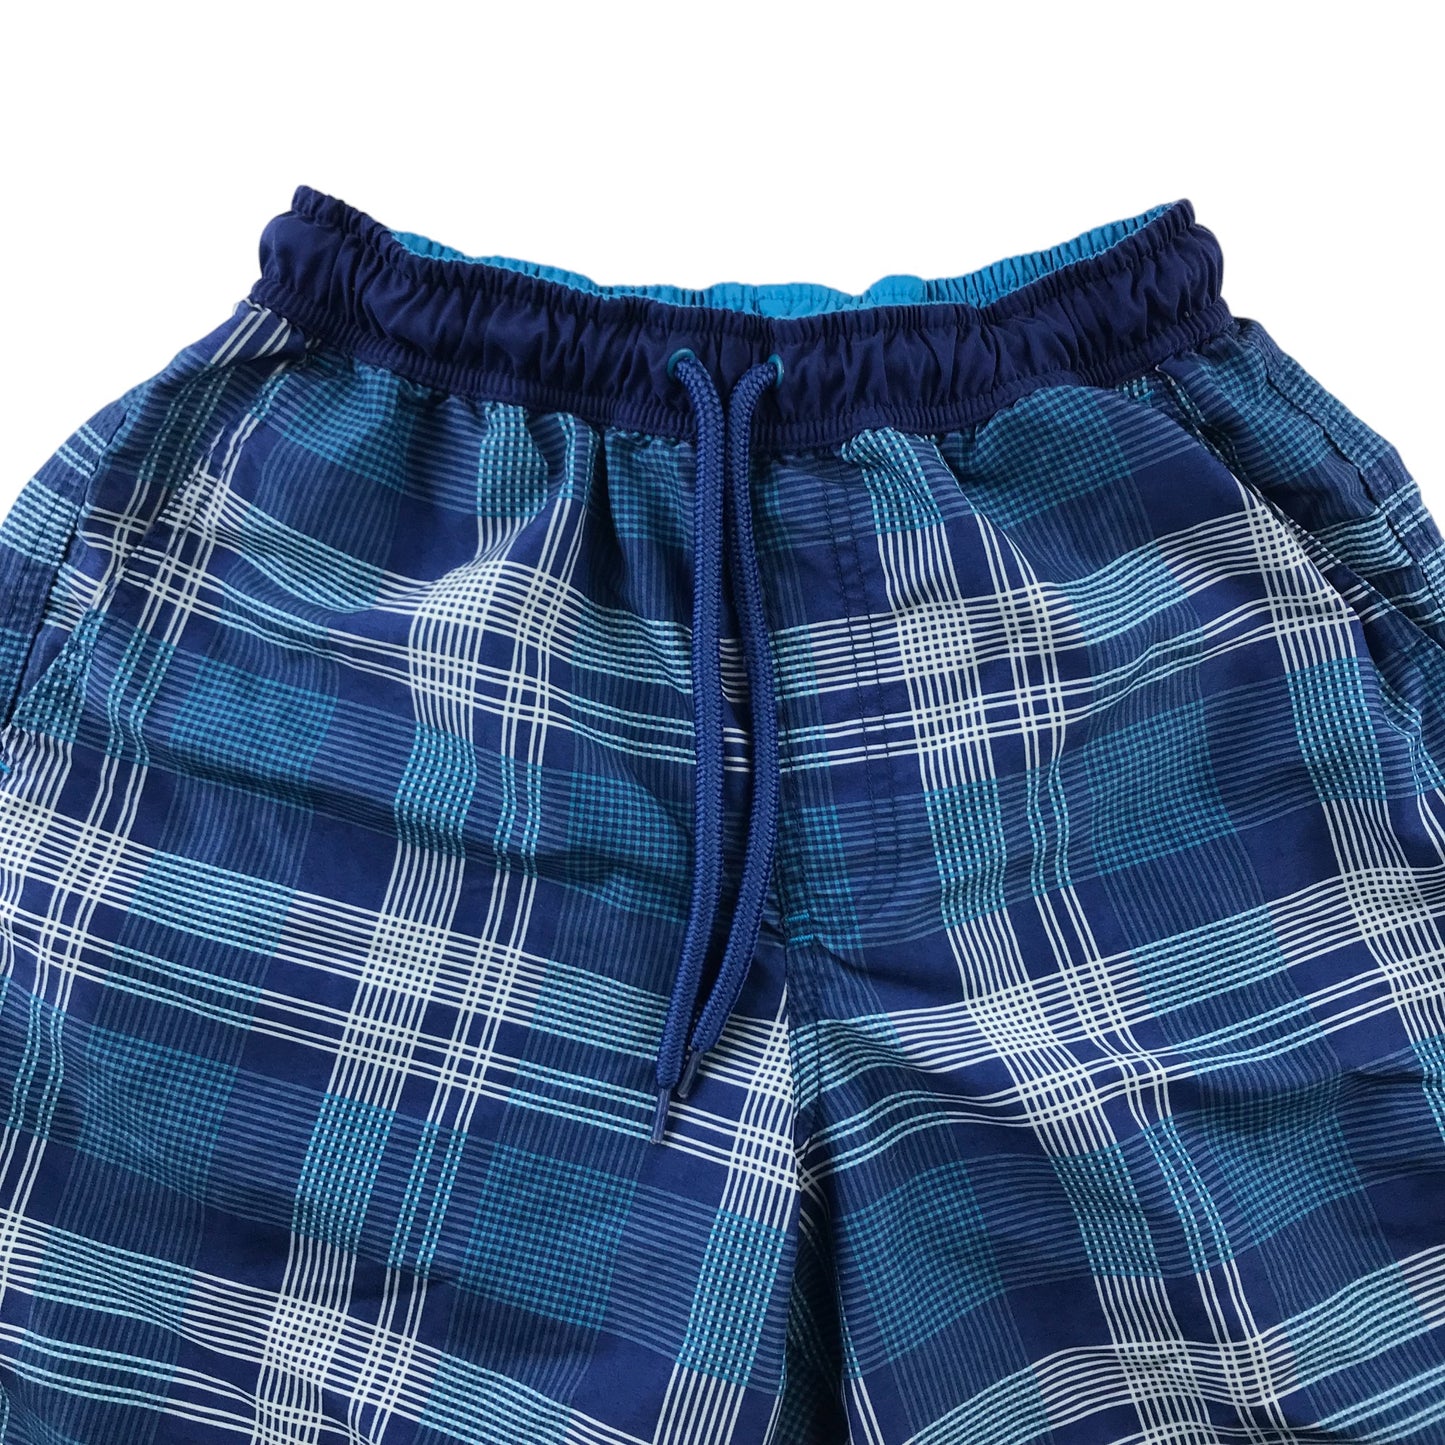 F&F Swim Trunks Size Men S Blue Check Pattern Shorts